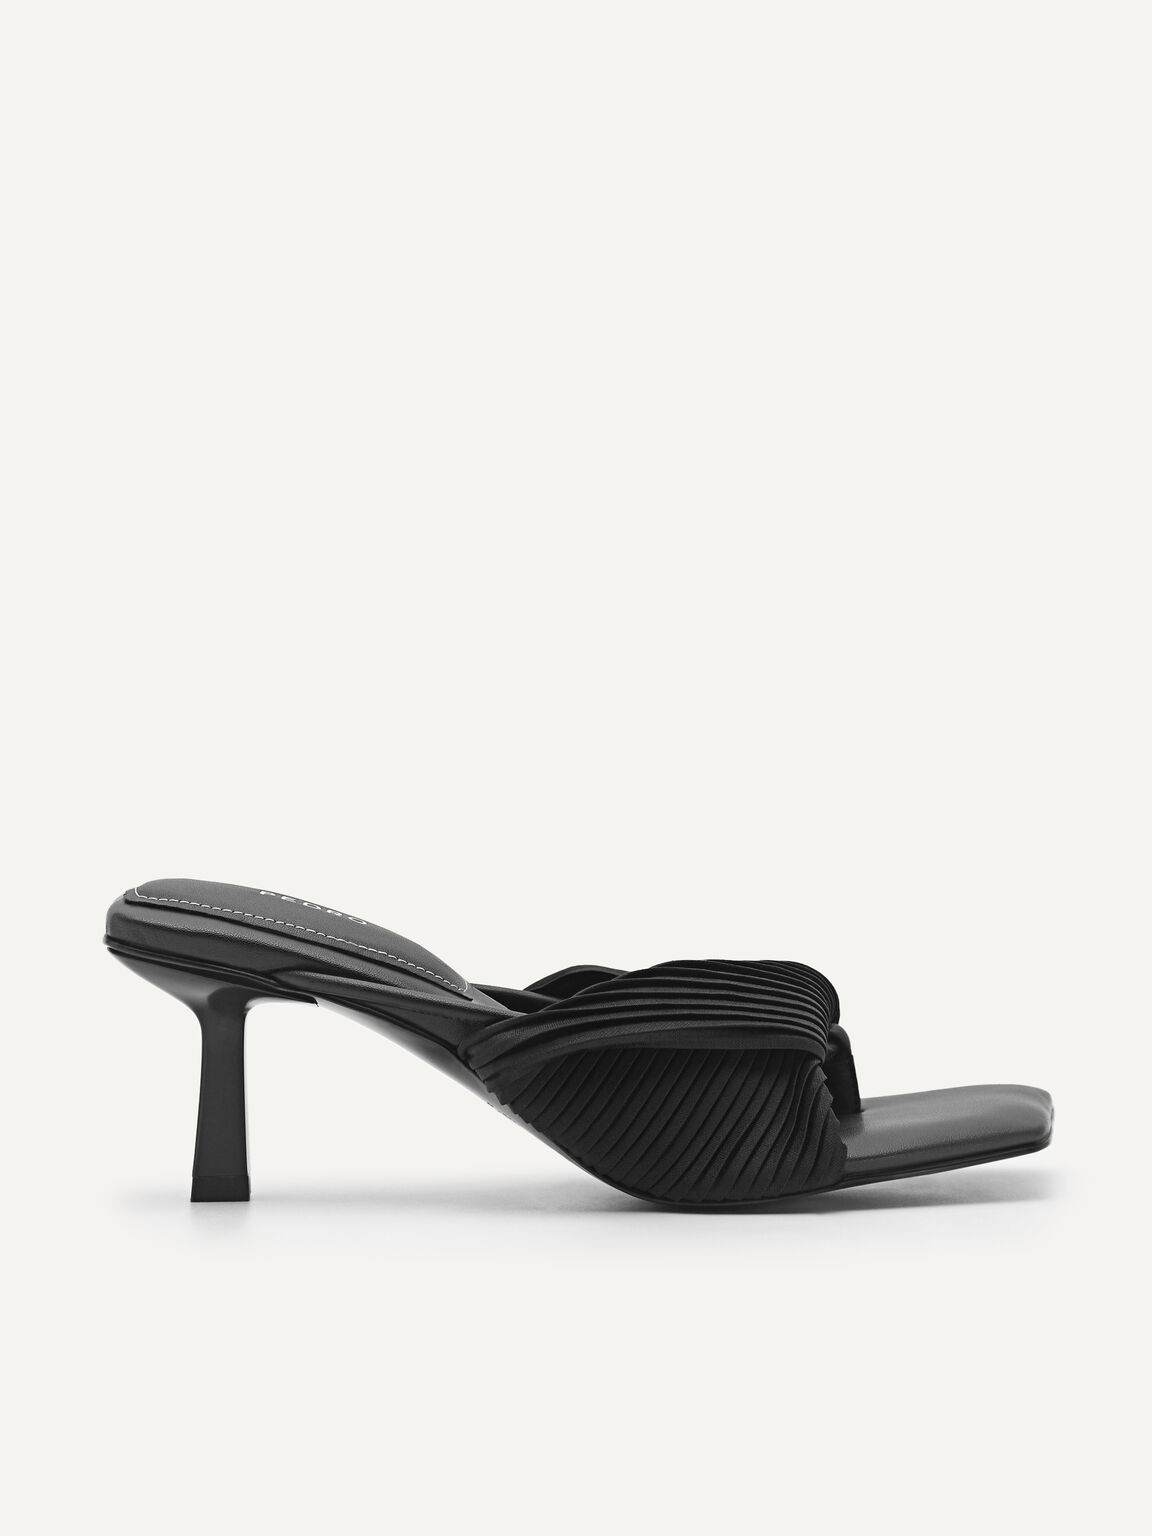 rePEDRO Pleated Heeled Sandals, Black, hi-res